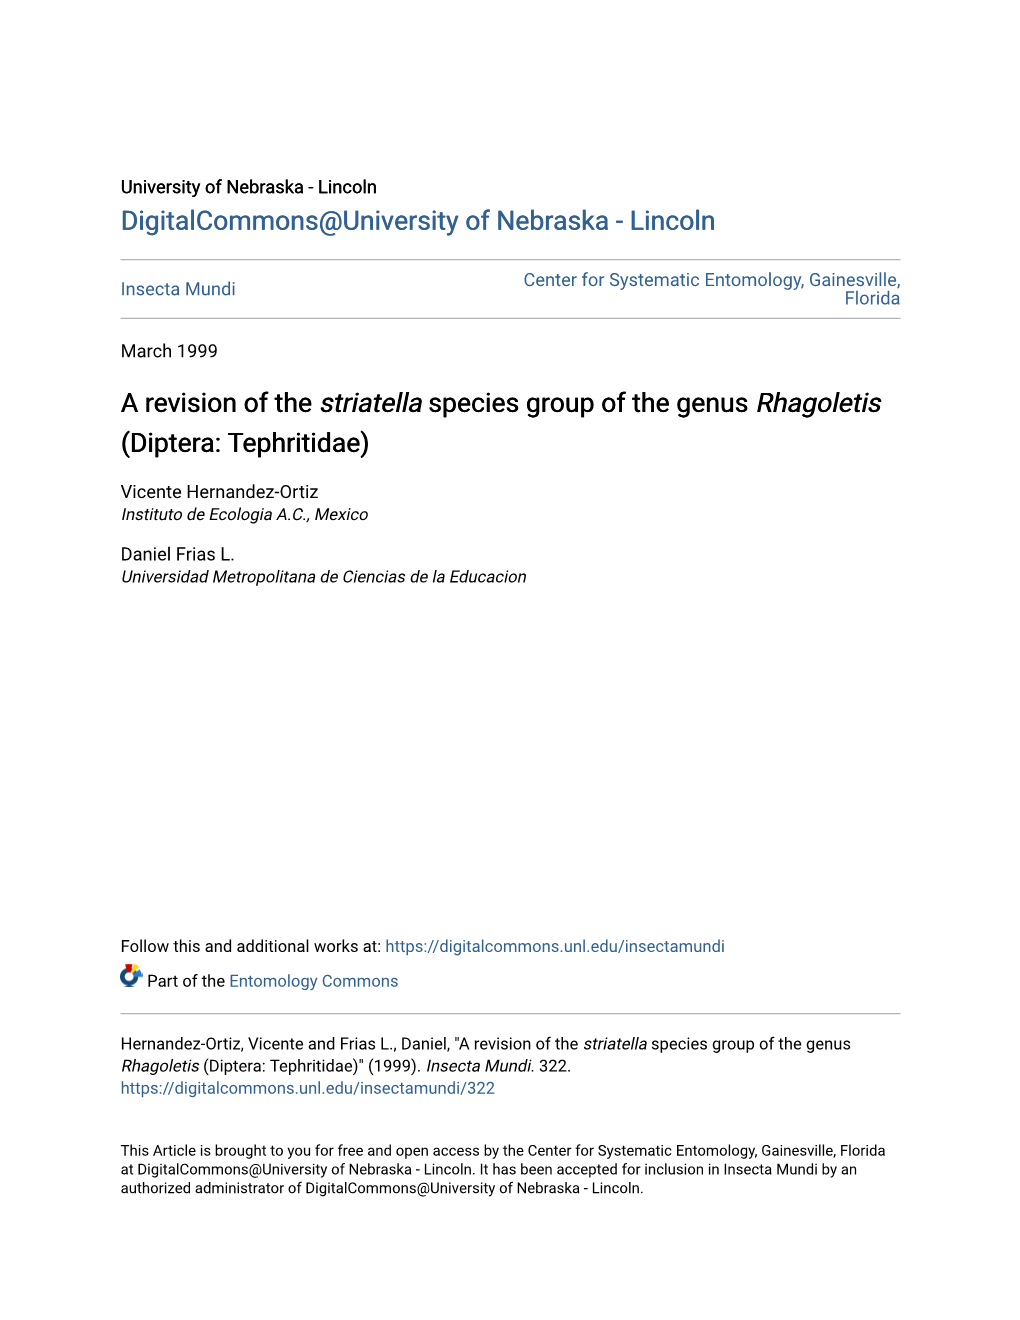 A Revision of the Striatella Species Group of the Genus Rhagoletis (Diptera: Tephritidae)